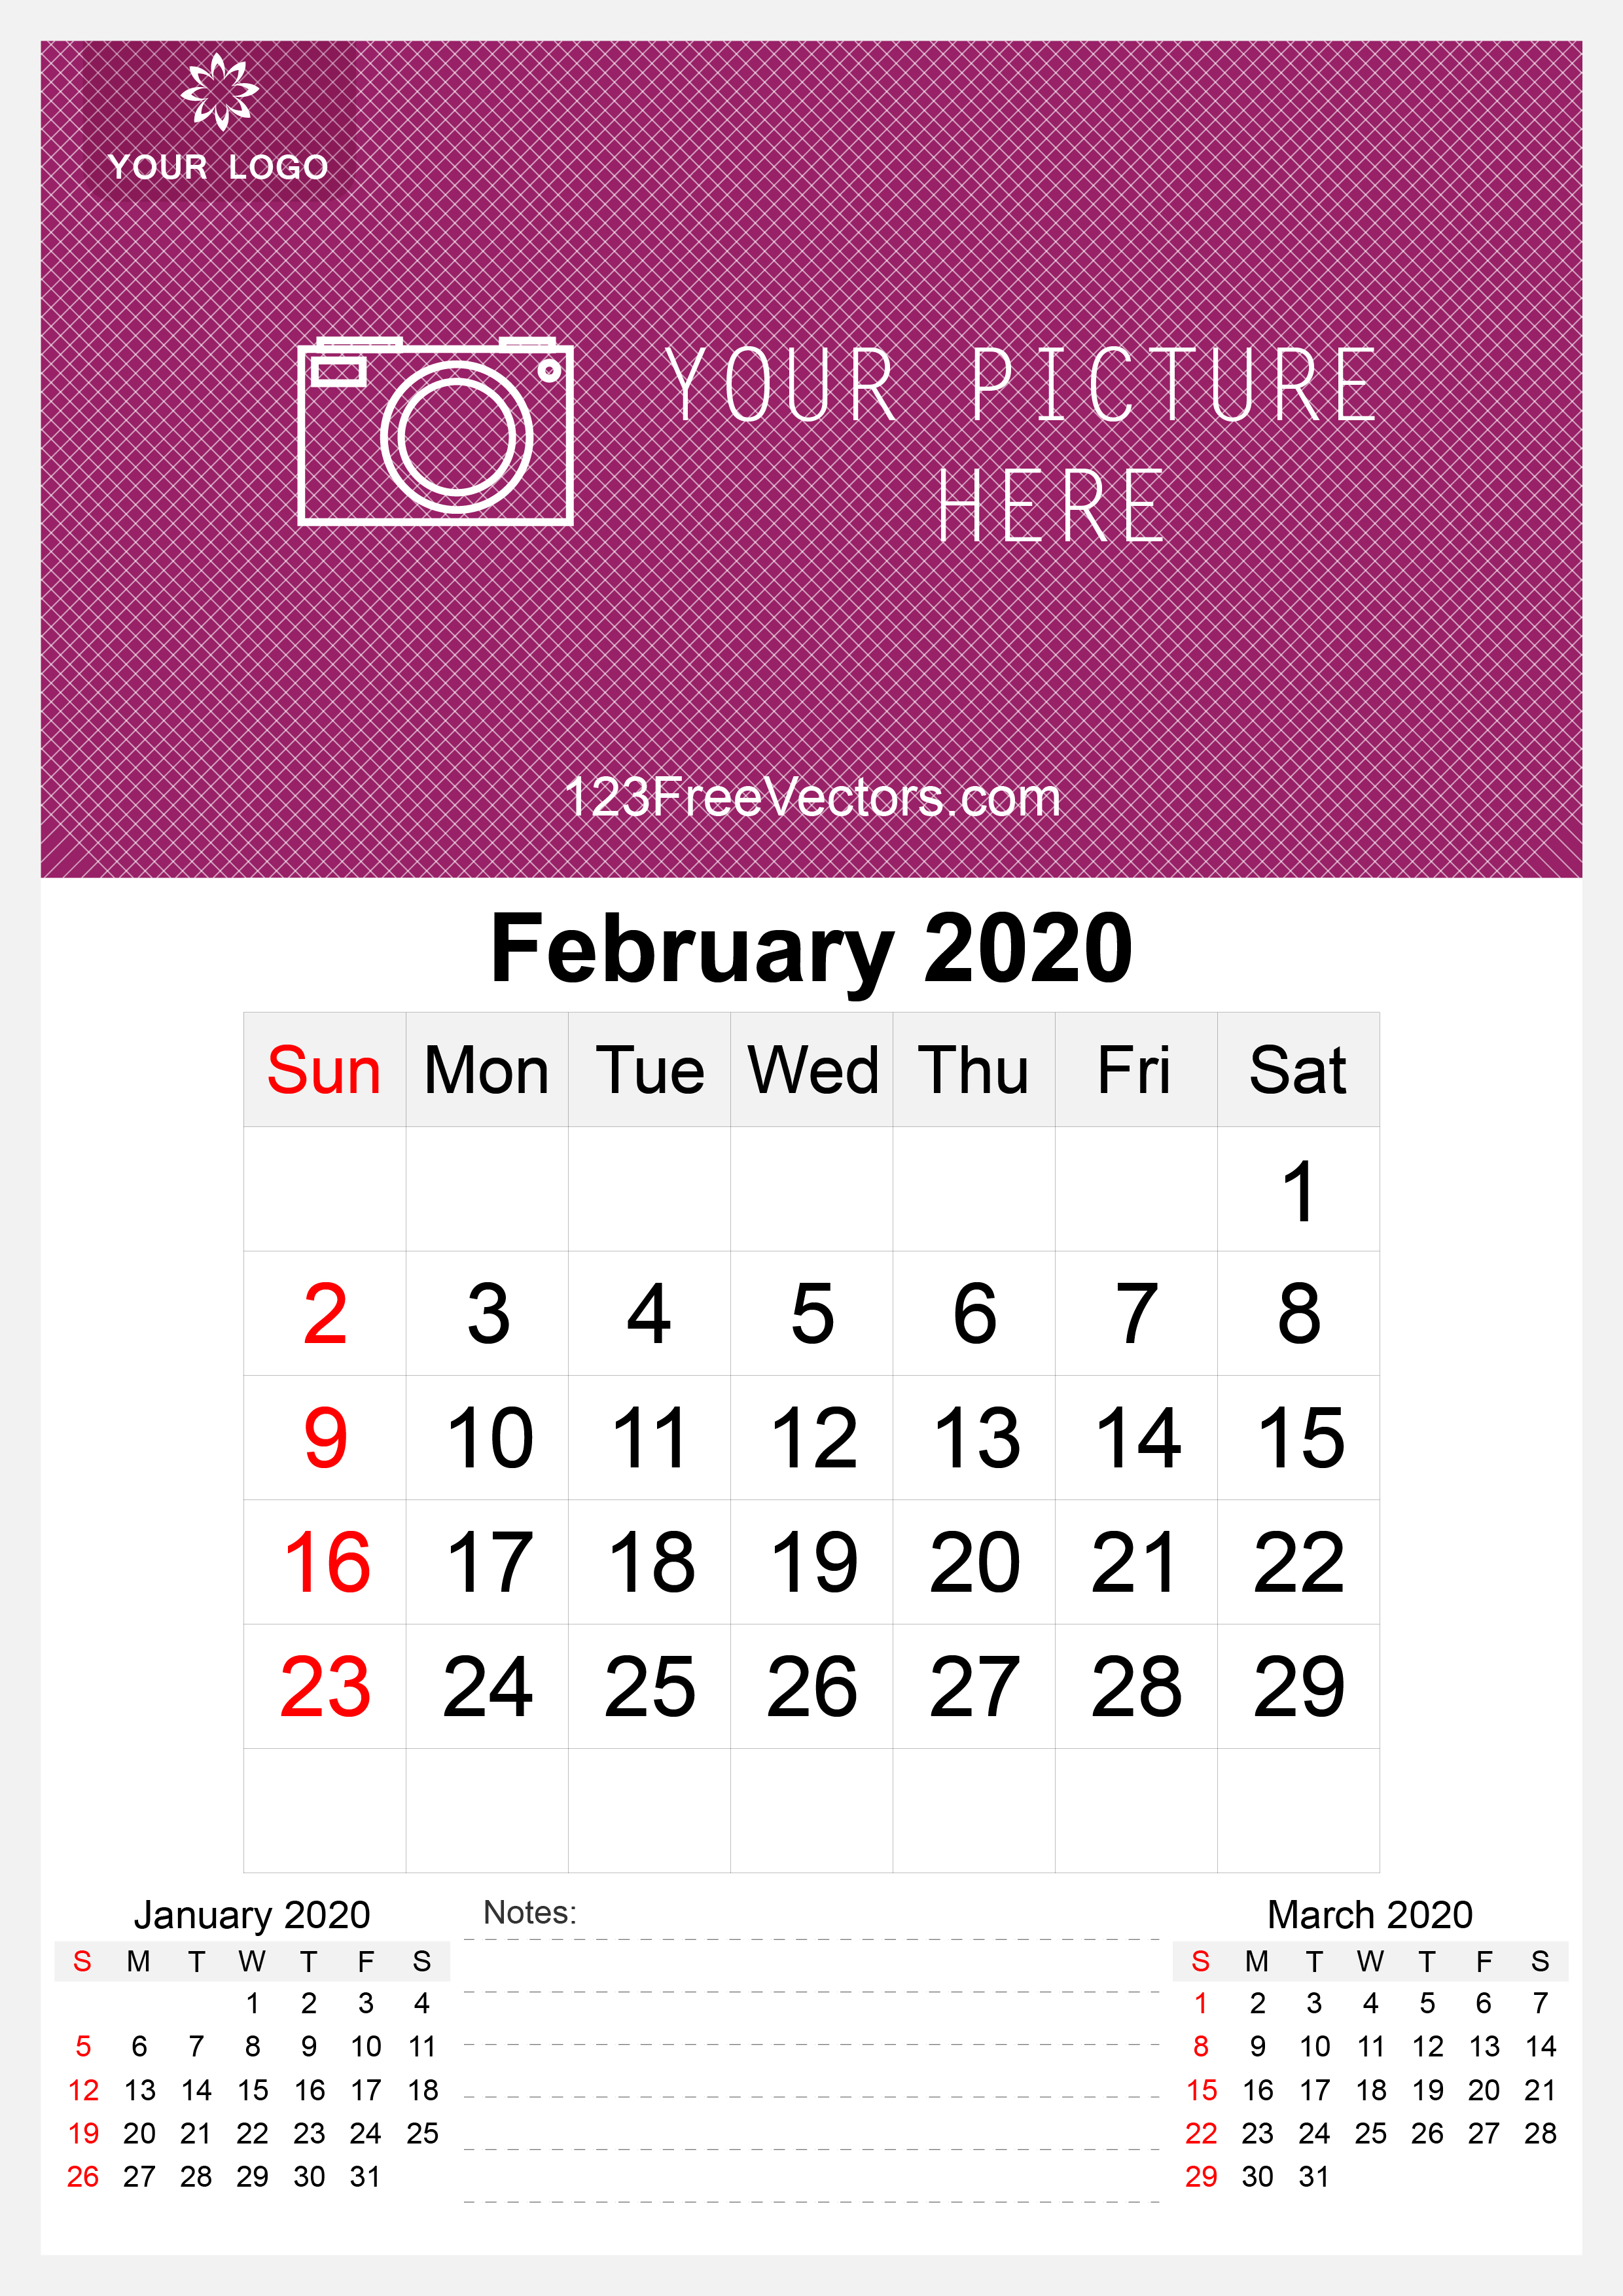 February Calendar Template from files.123freevectors.com